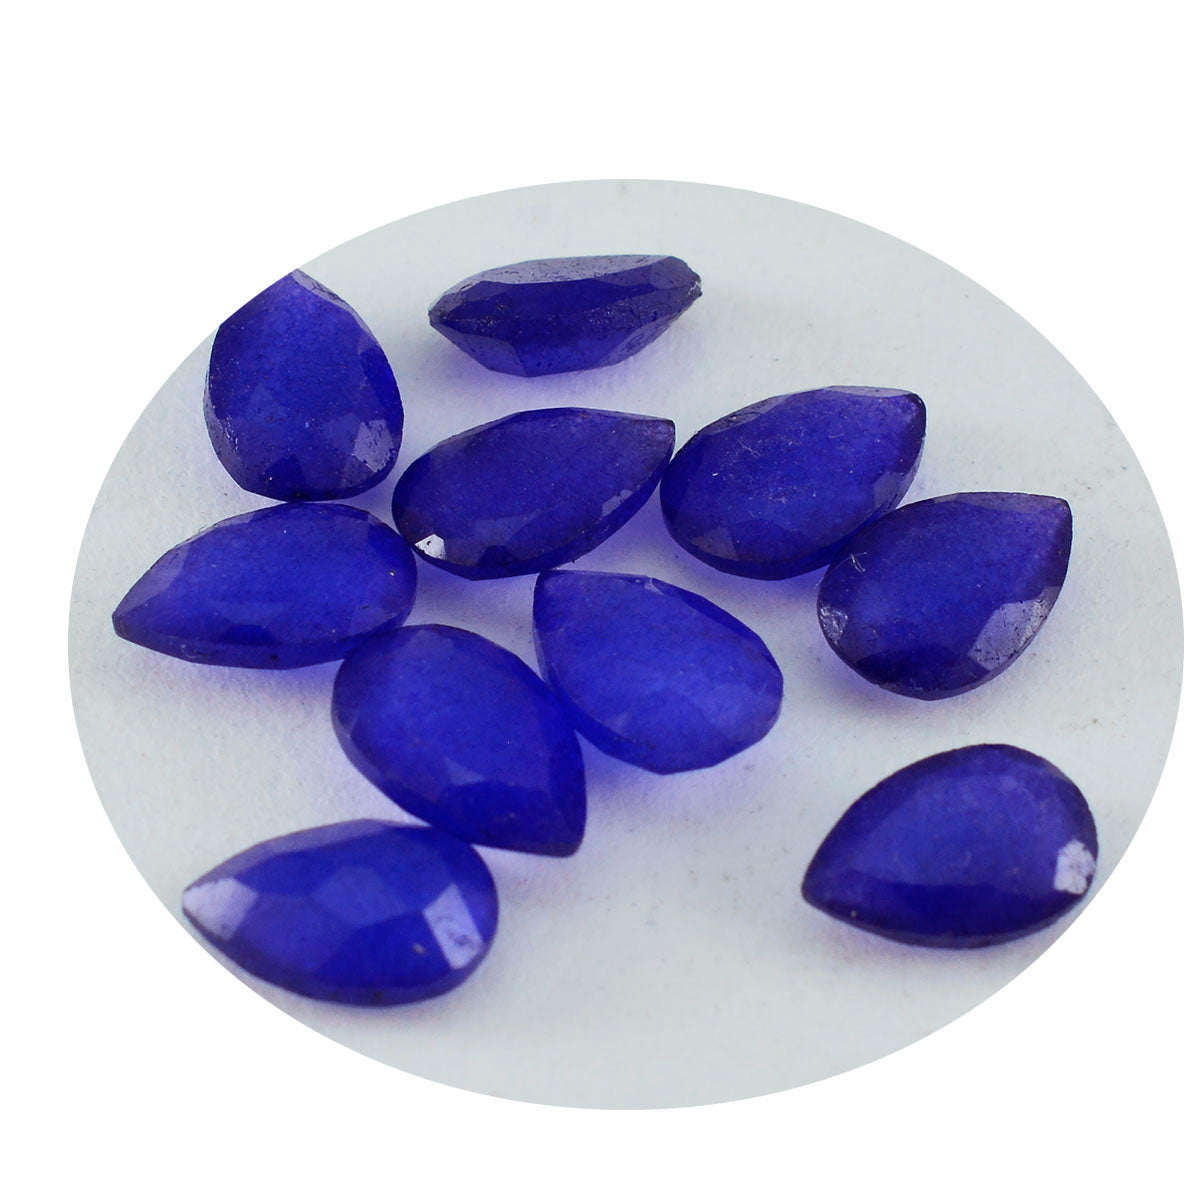 riyogems 1 pezzo di diaspro blu autentico sfaccettato 4x6 mm a forma di pera, gemma di qualità sorprendente